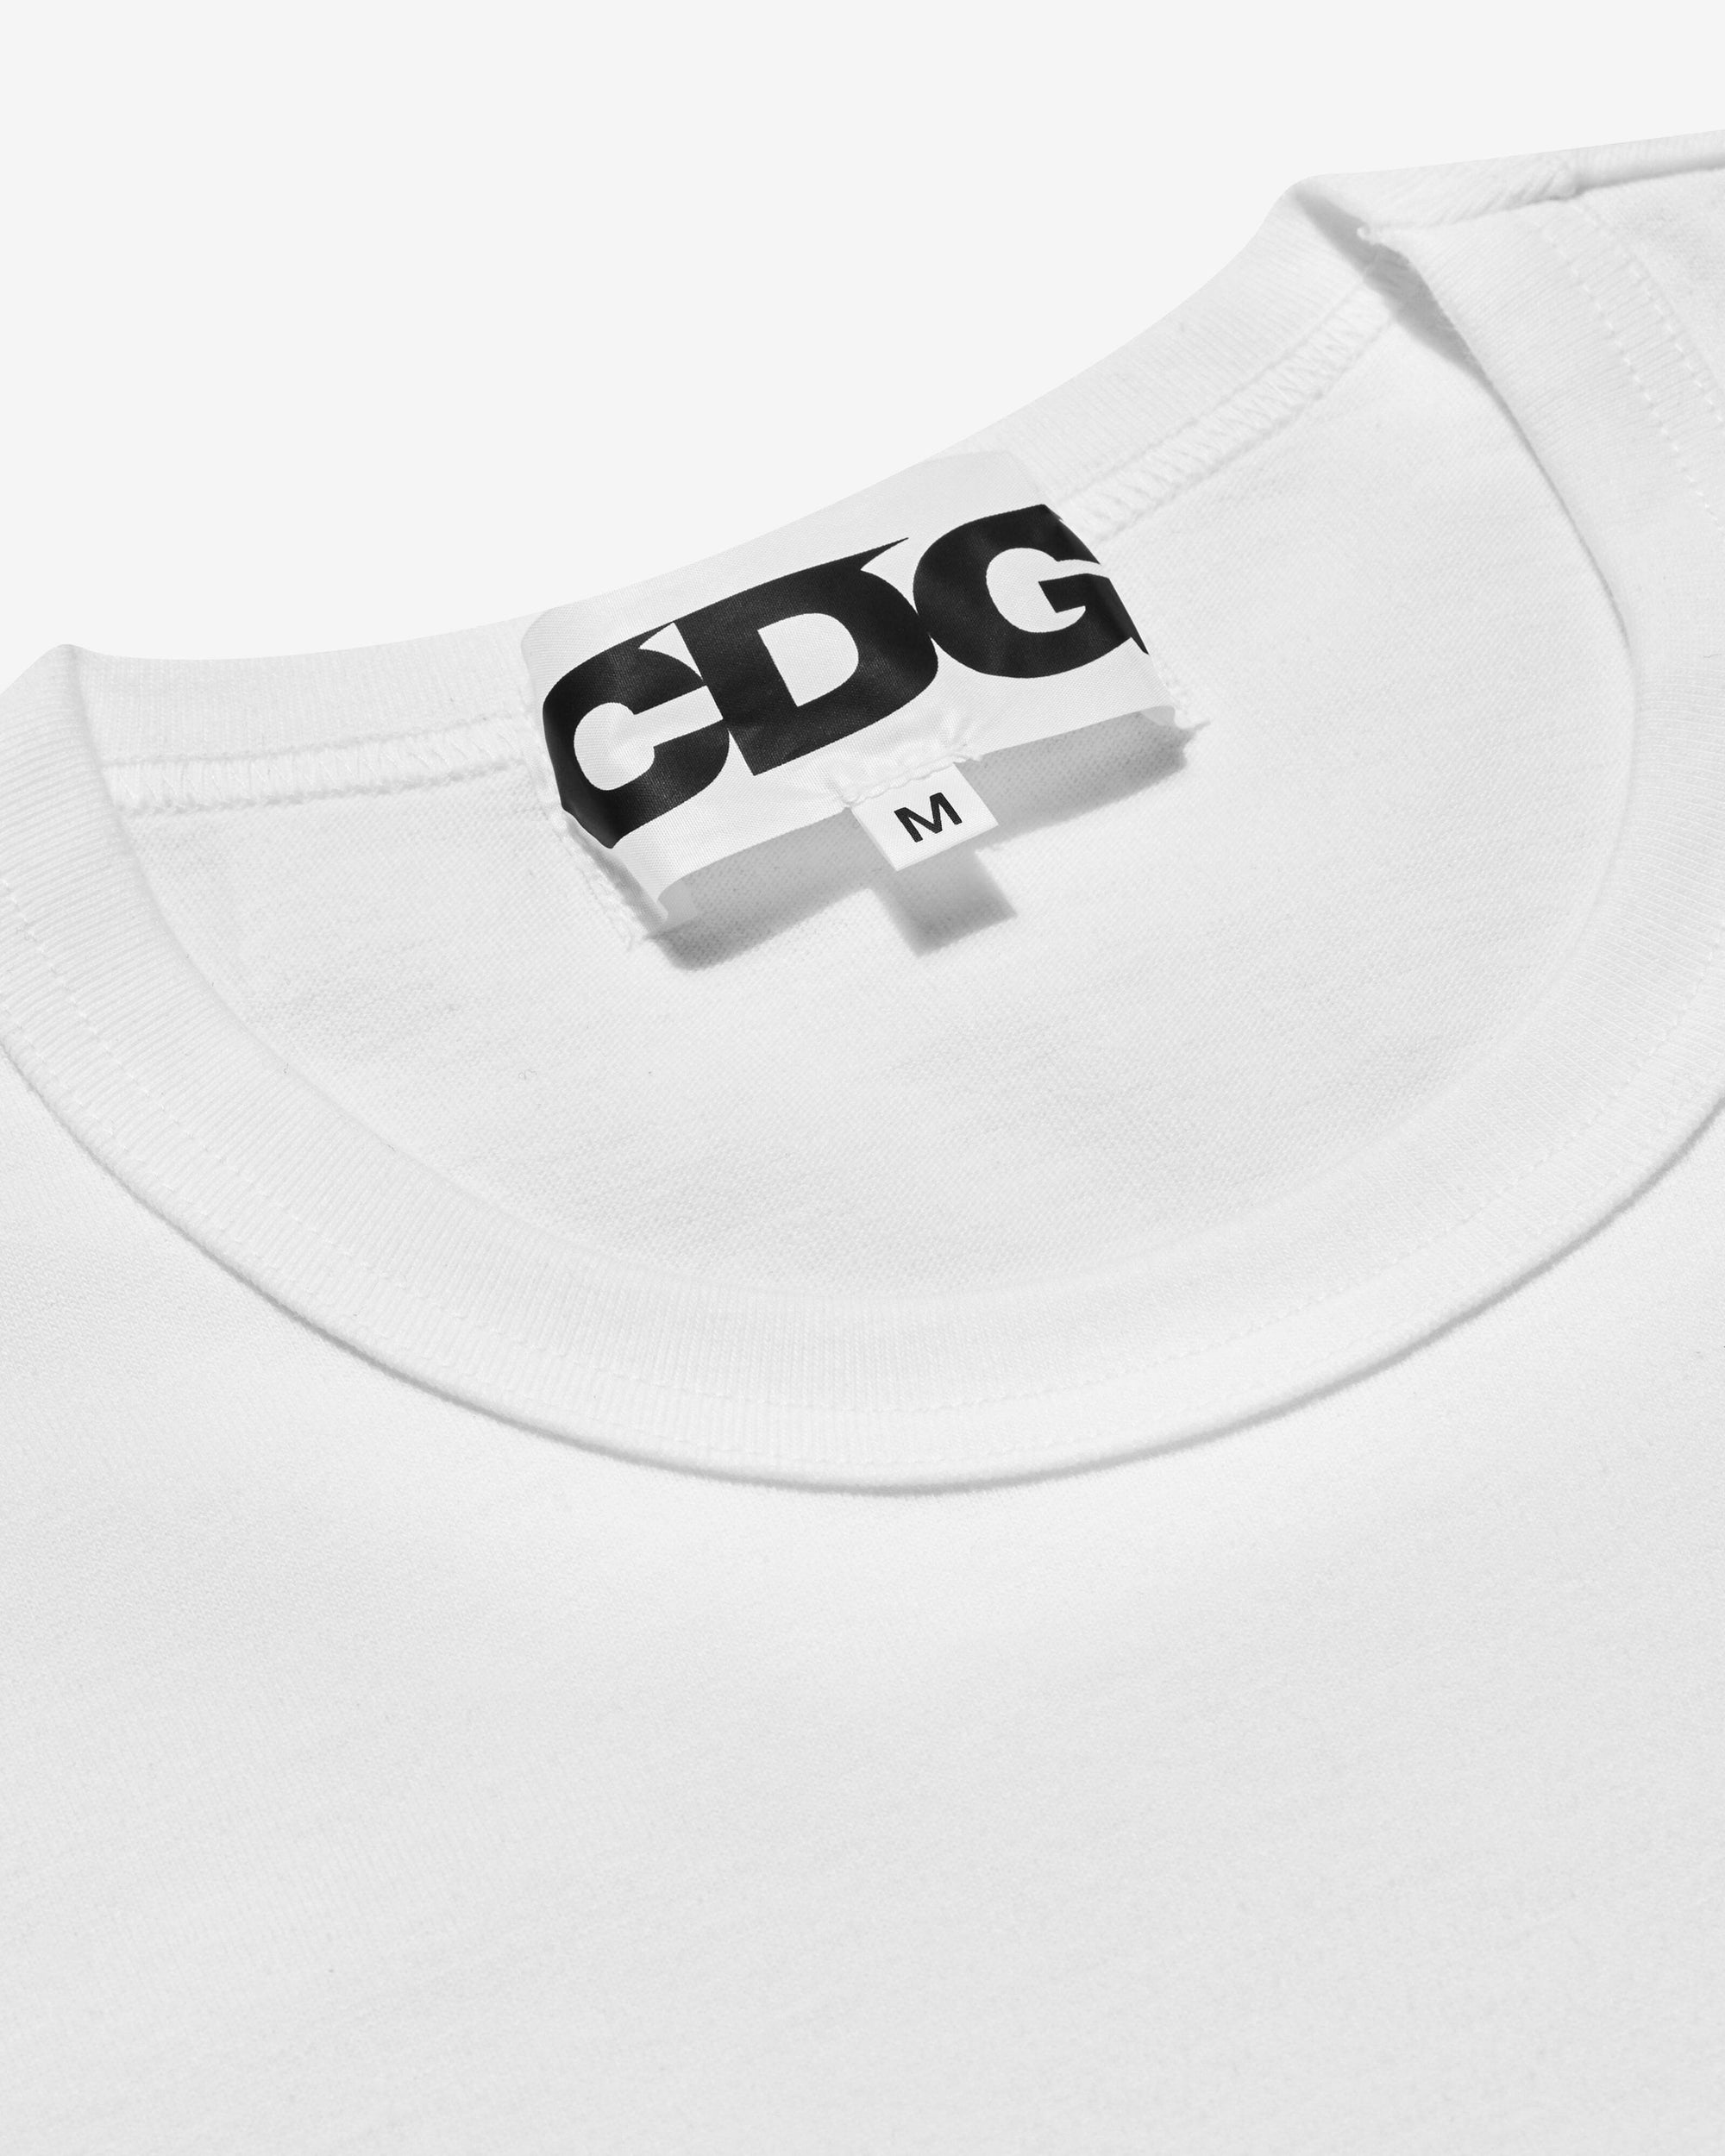 CDG - Long Sleeve T-Shirt - (White) view 3